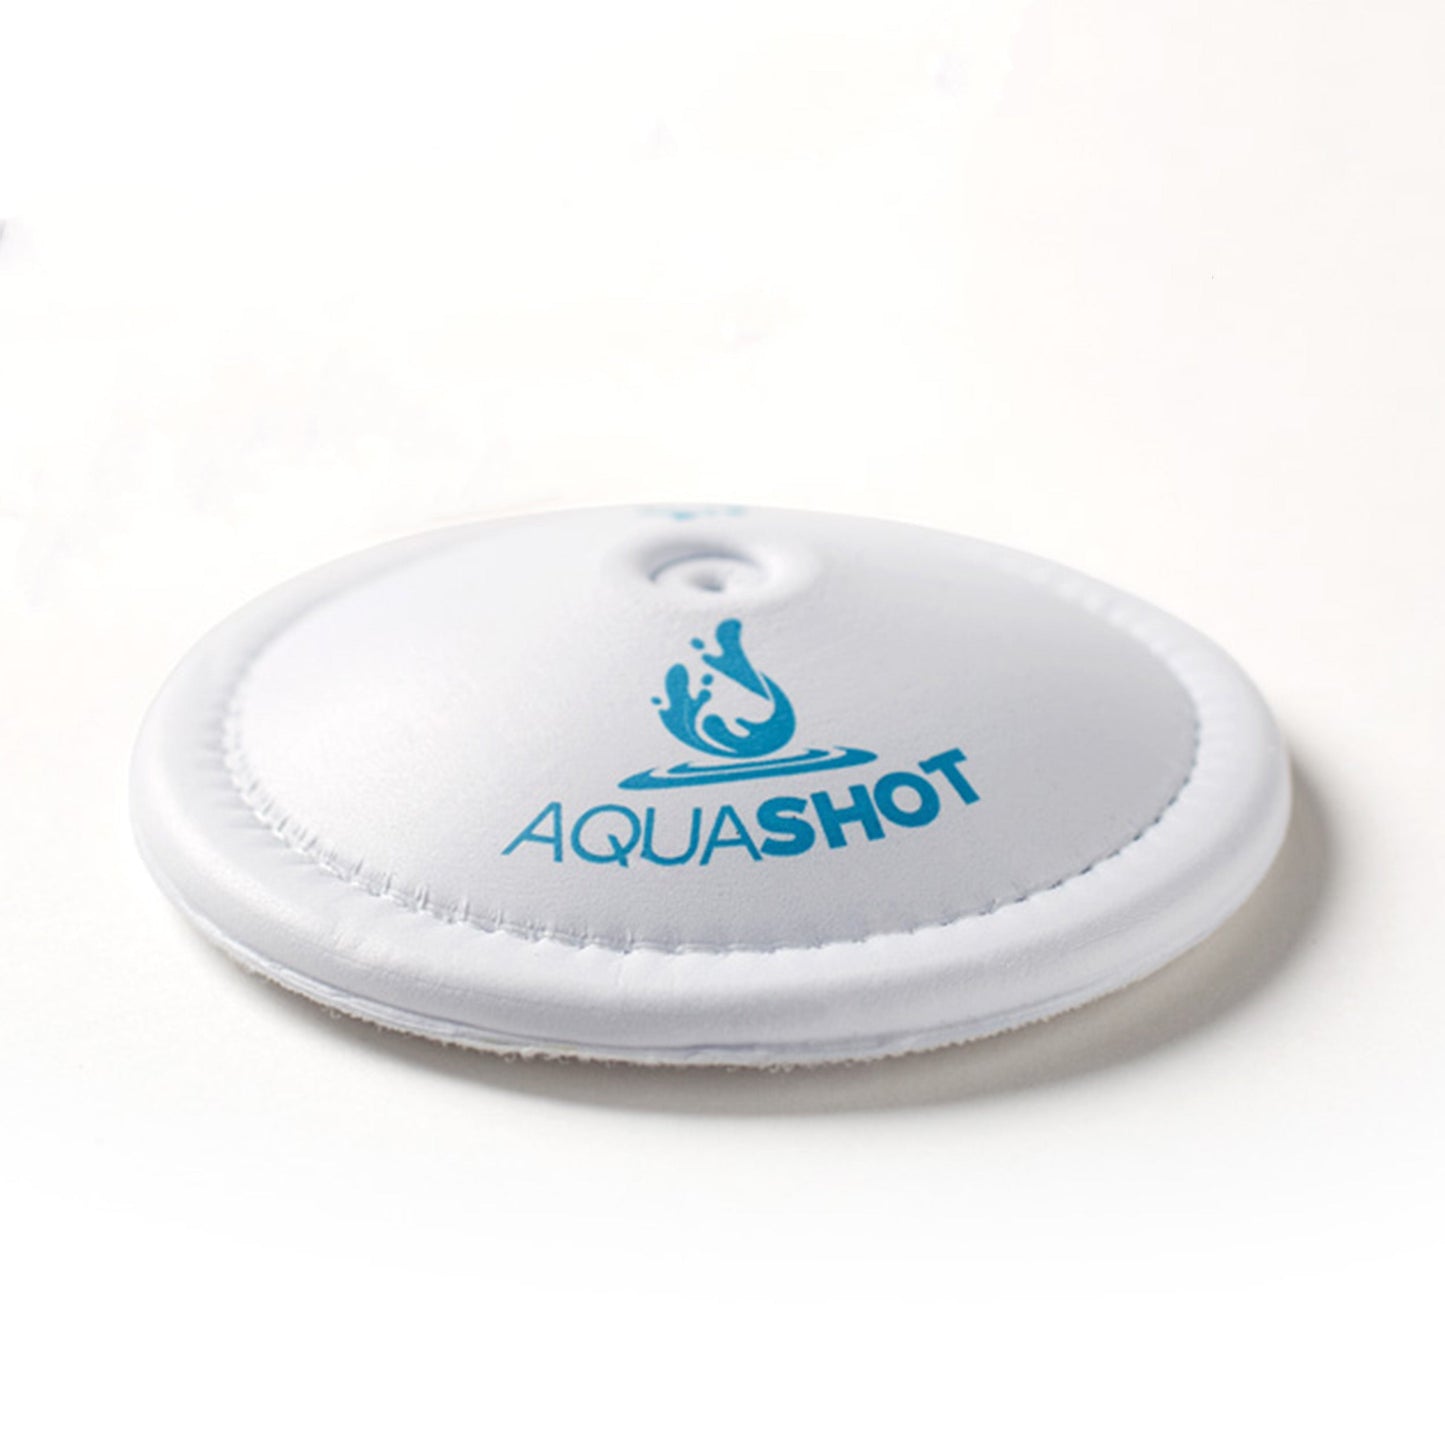 Introducing AquaShot ACE ♠